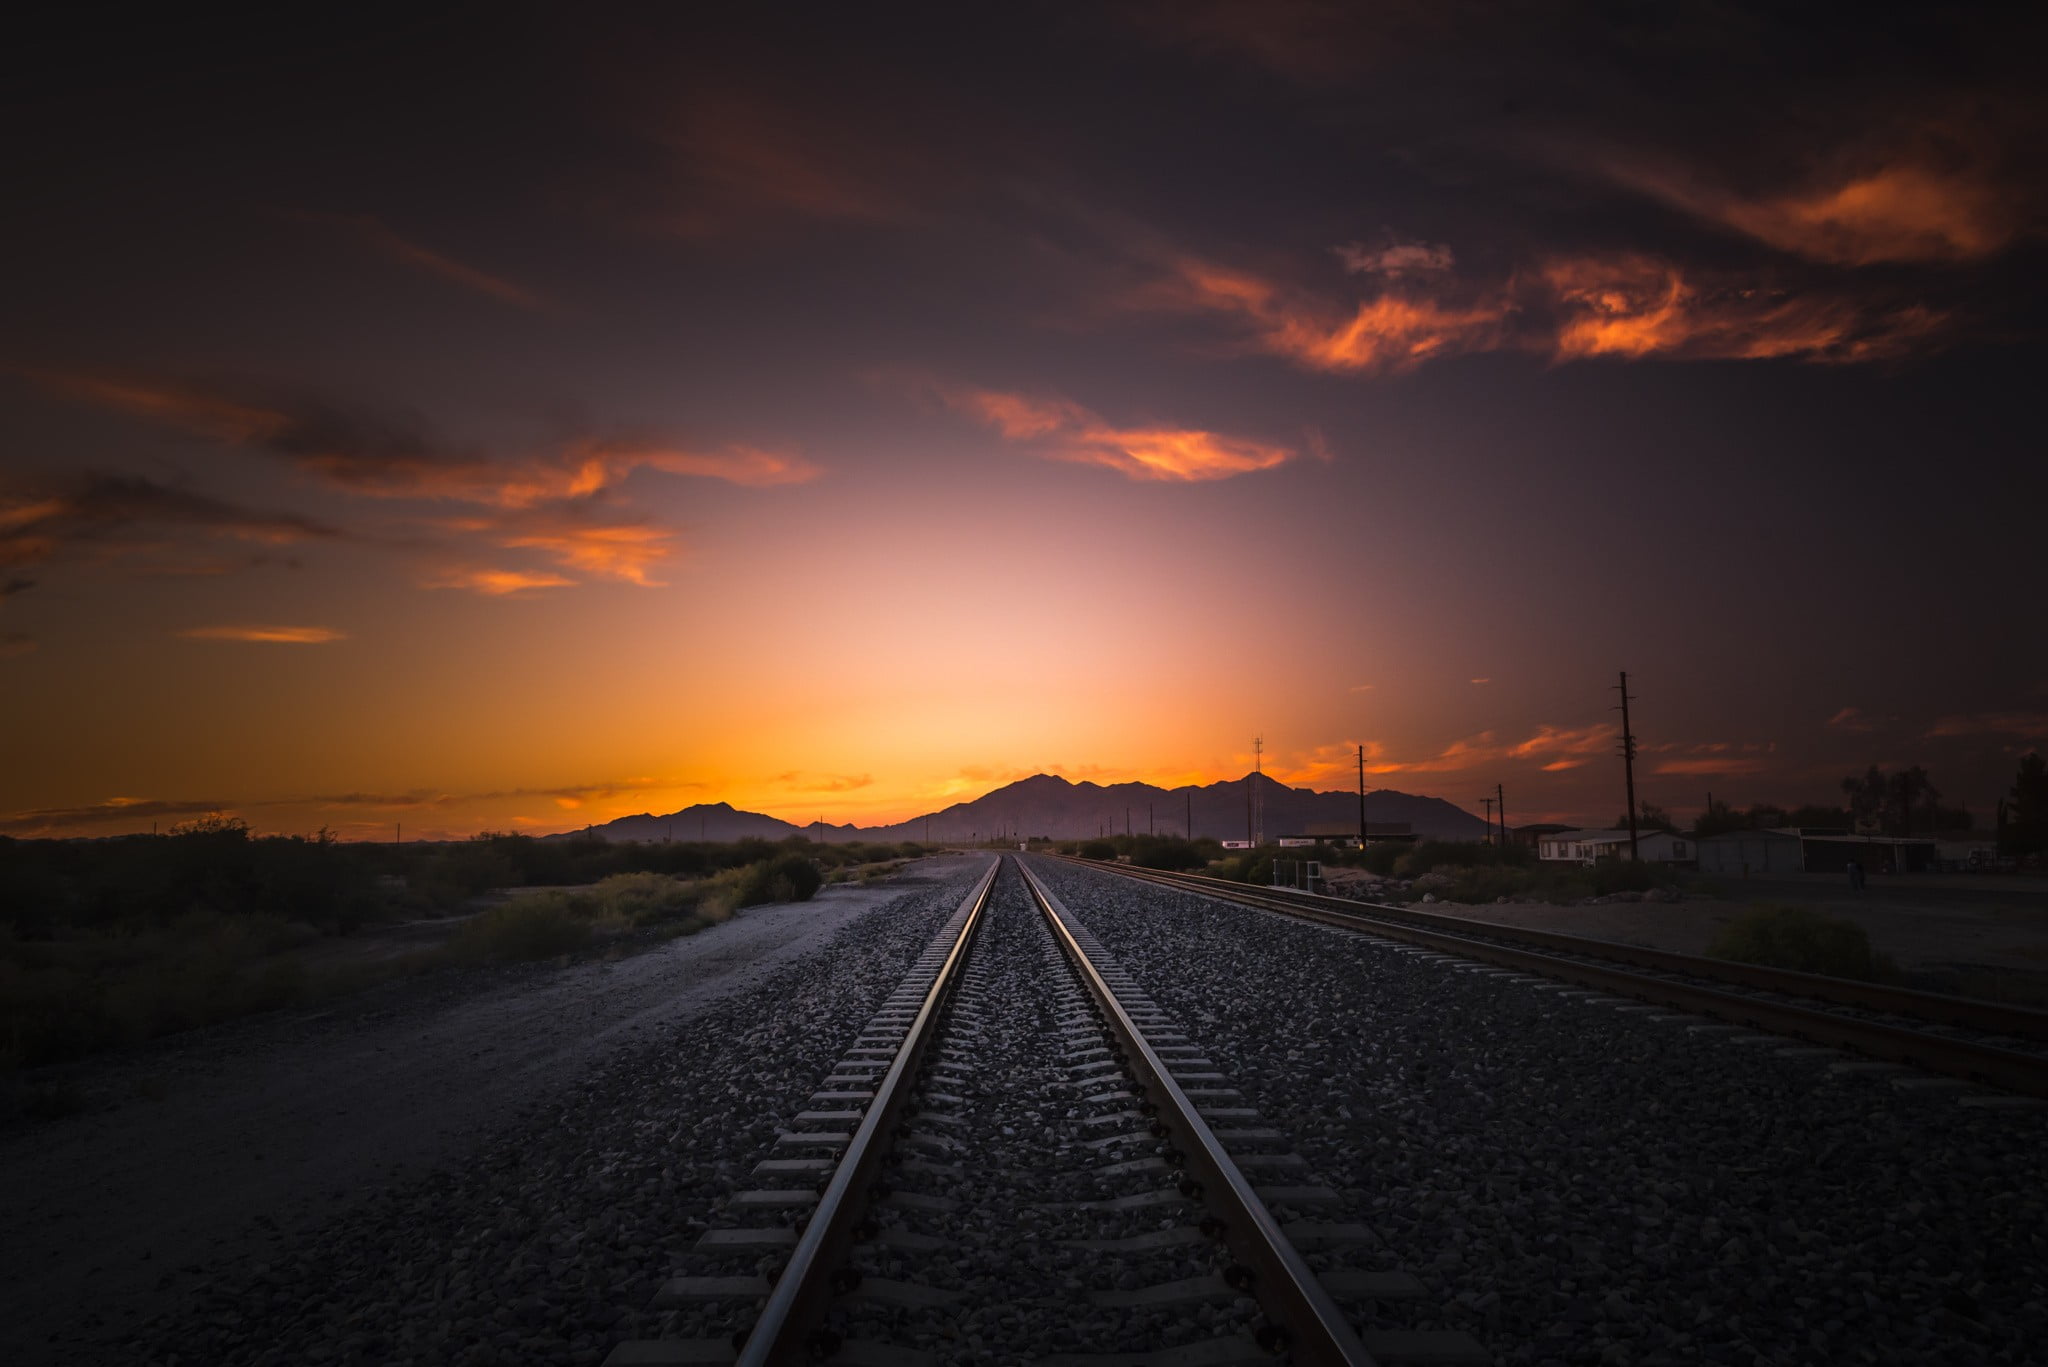 grey metal train rail during dawn